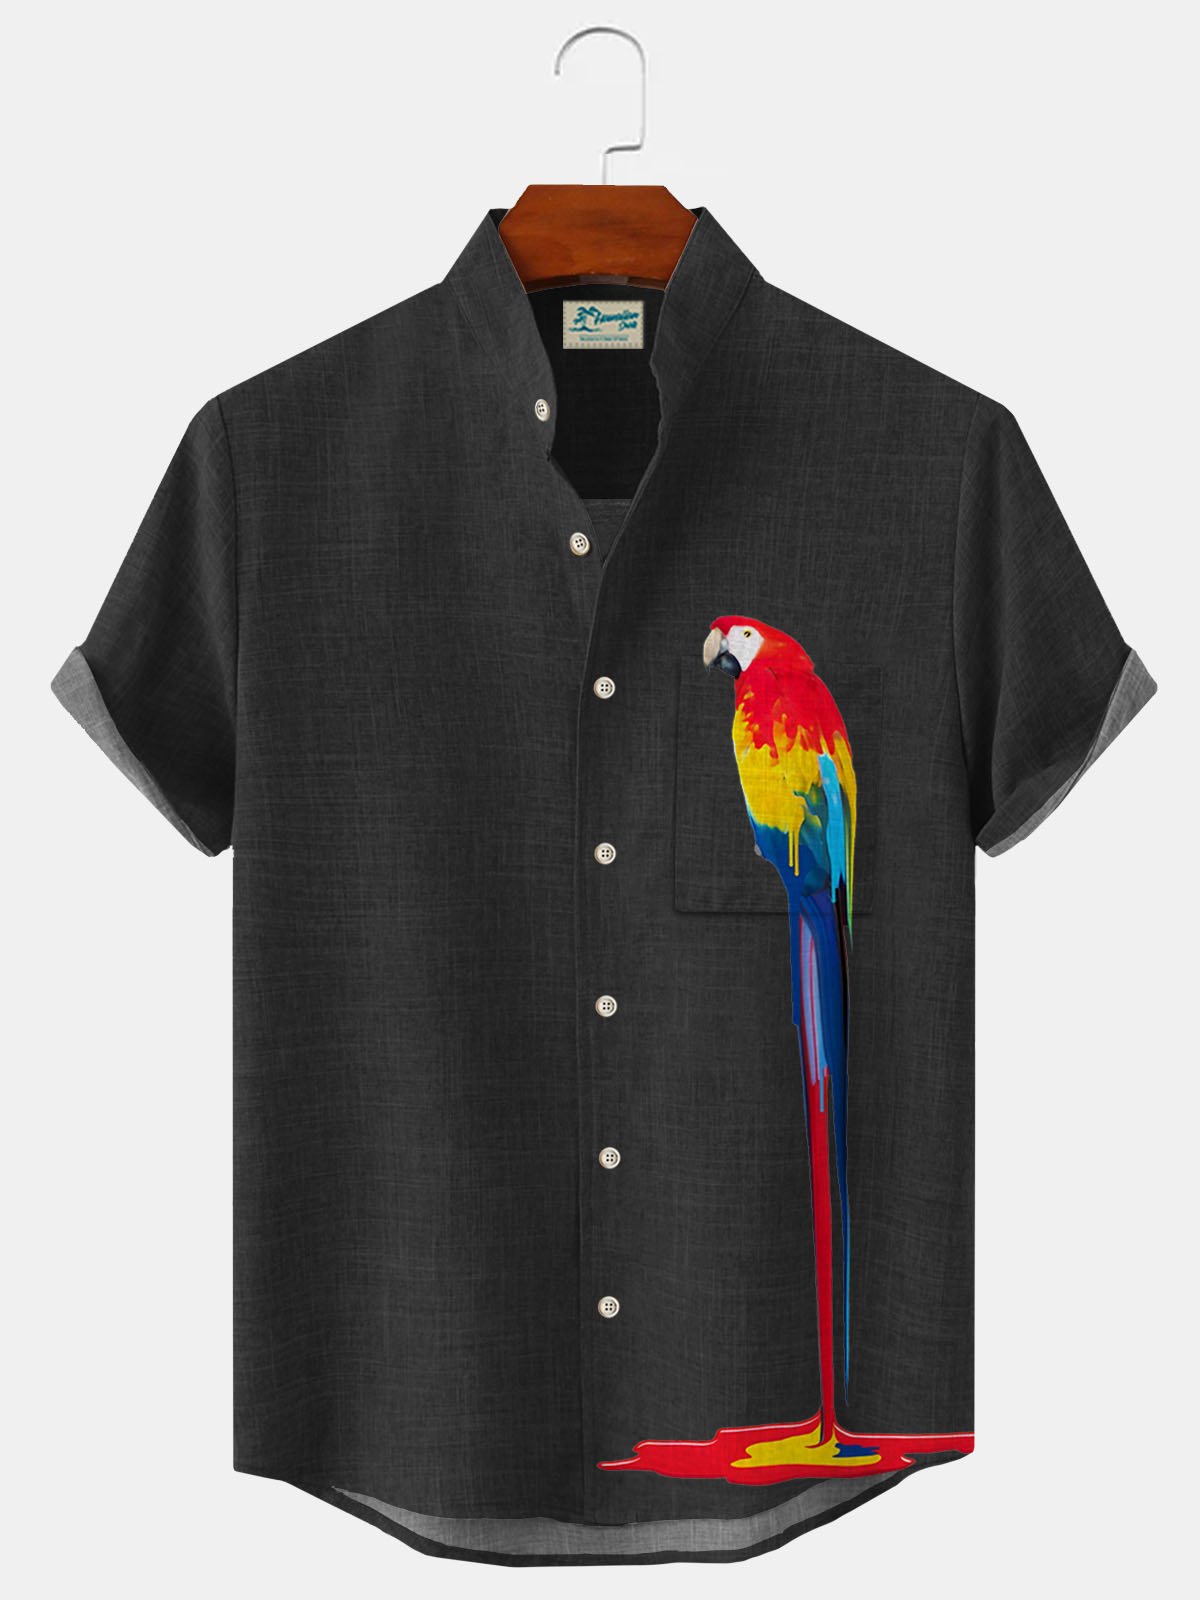 Royaura Hawaiian Parrot Print Men's Stand Collar Button Pocket Shirt